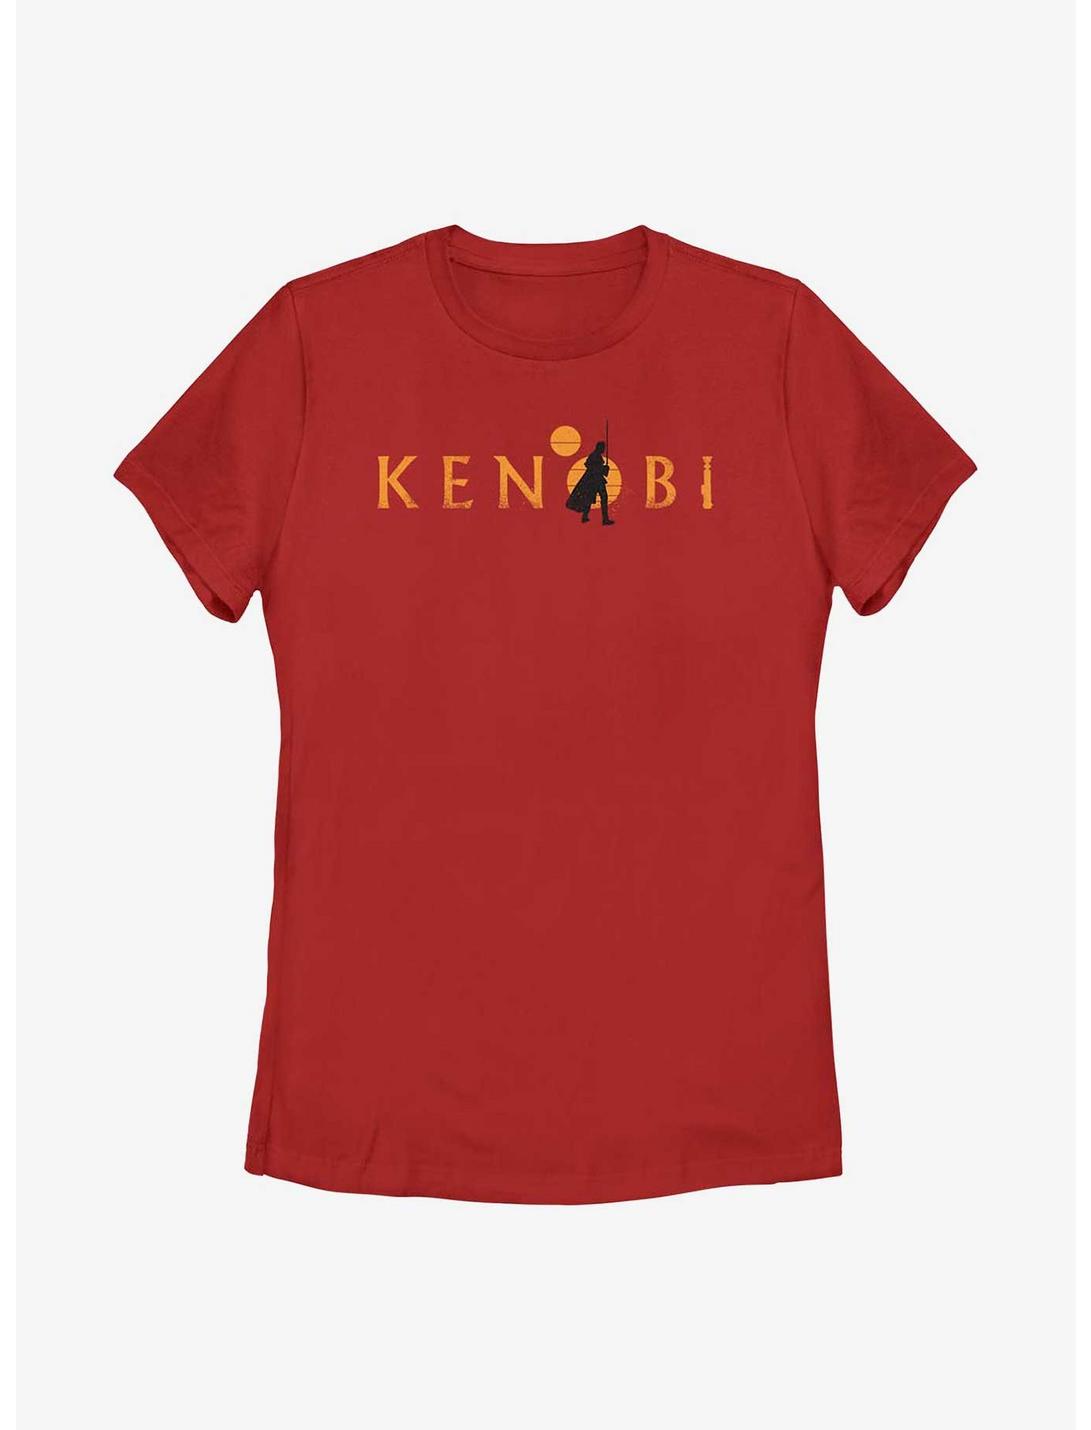 Star Wars Obi-Wan Kenobi Two Suns Logo Womens T-Shirt, RED, hi-res